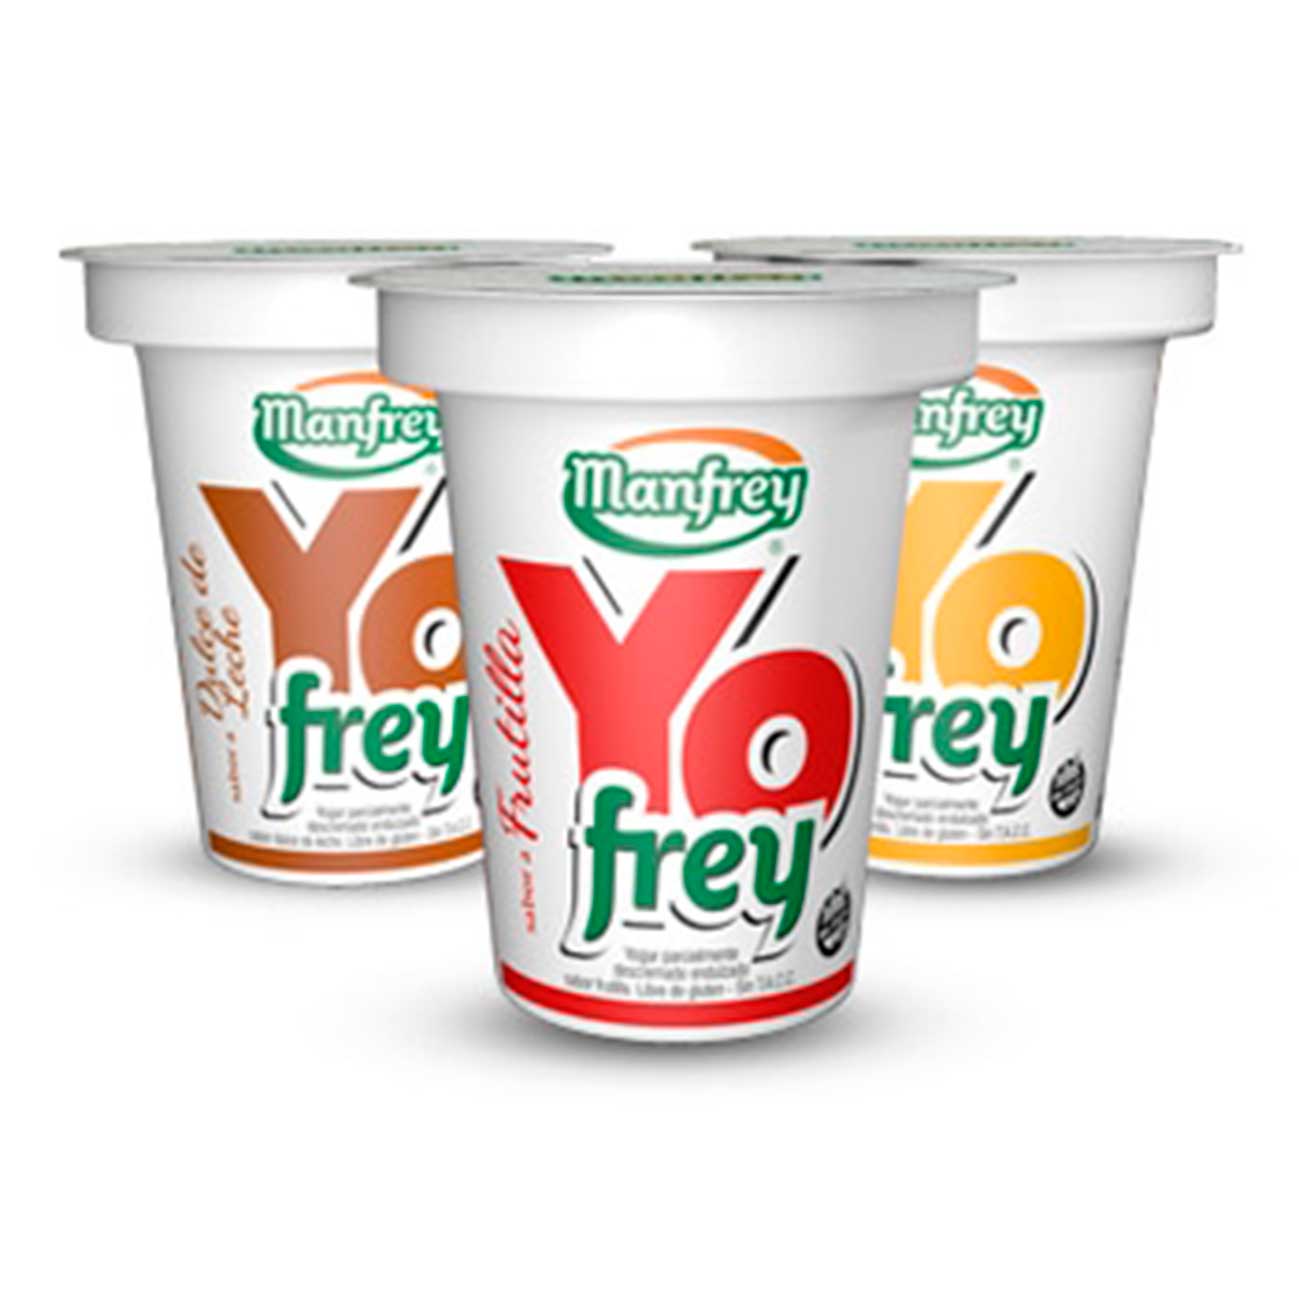 Yogur Yofrey parcialmente descremado120g MANFREY